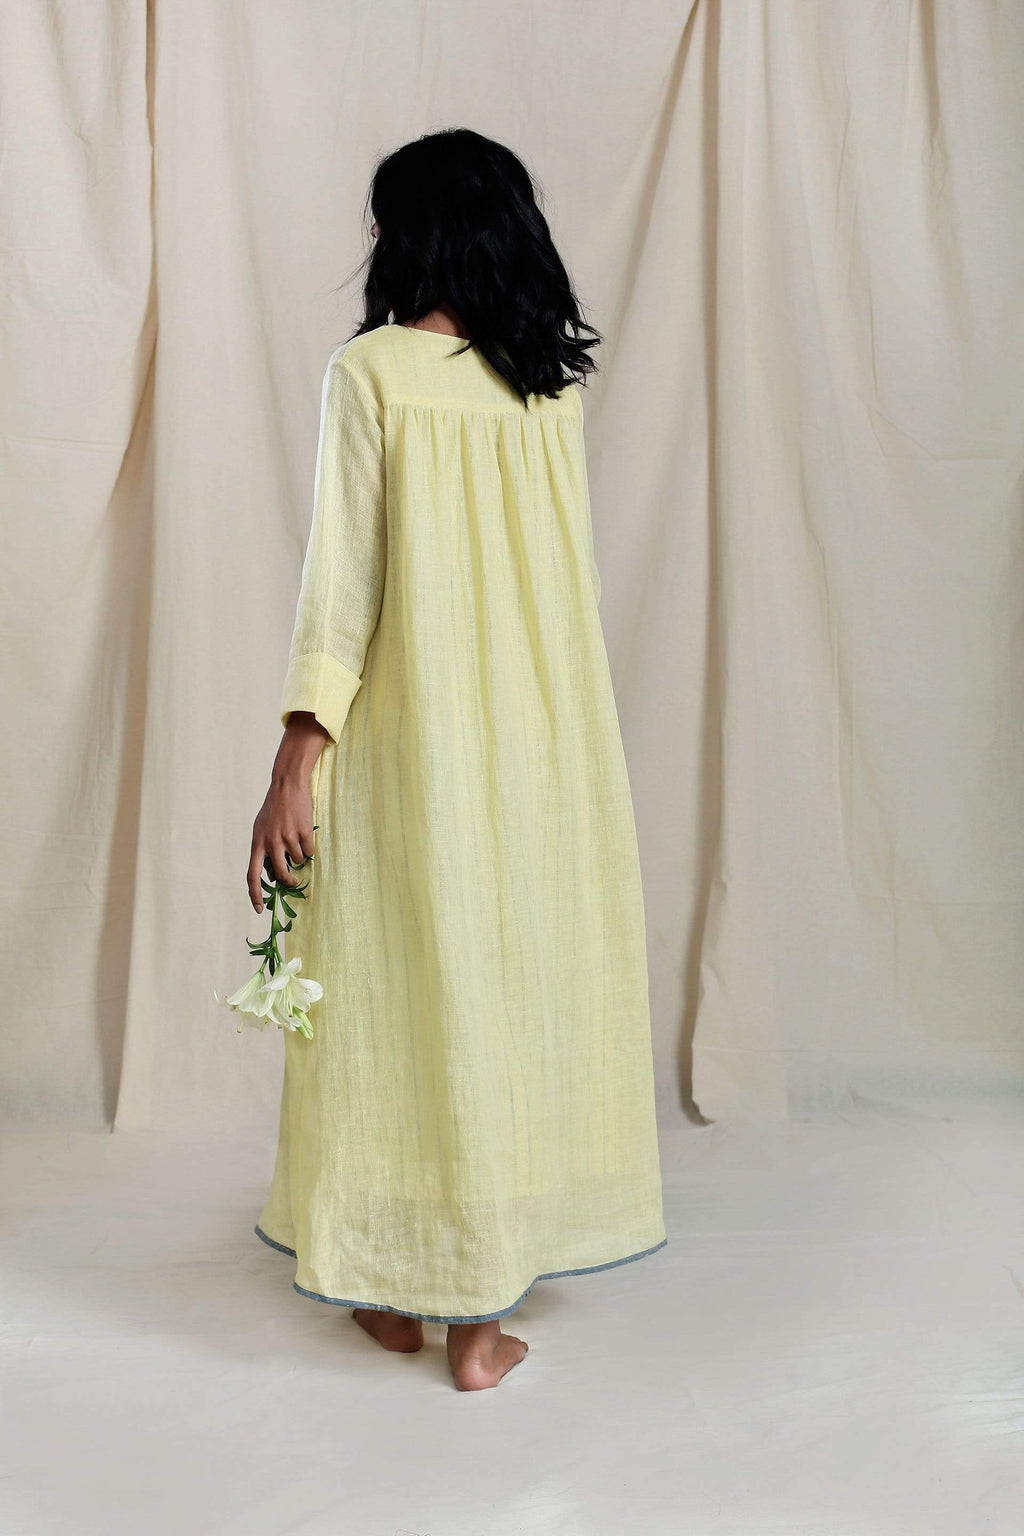 Mati Dresses Acaru Yellow Dress